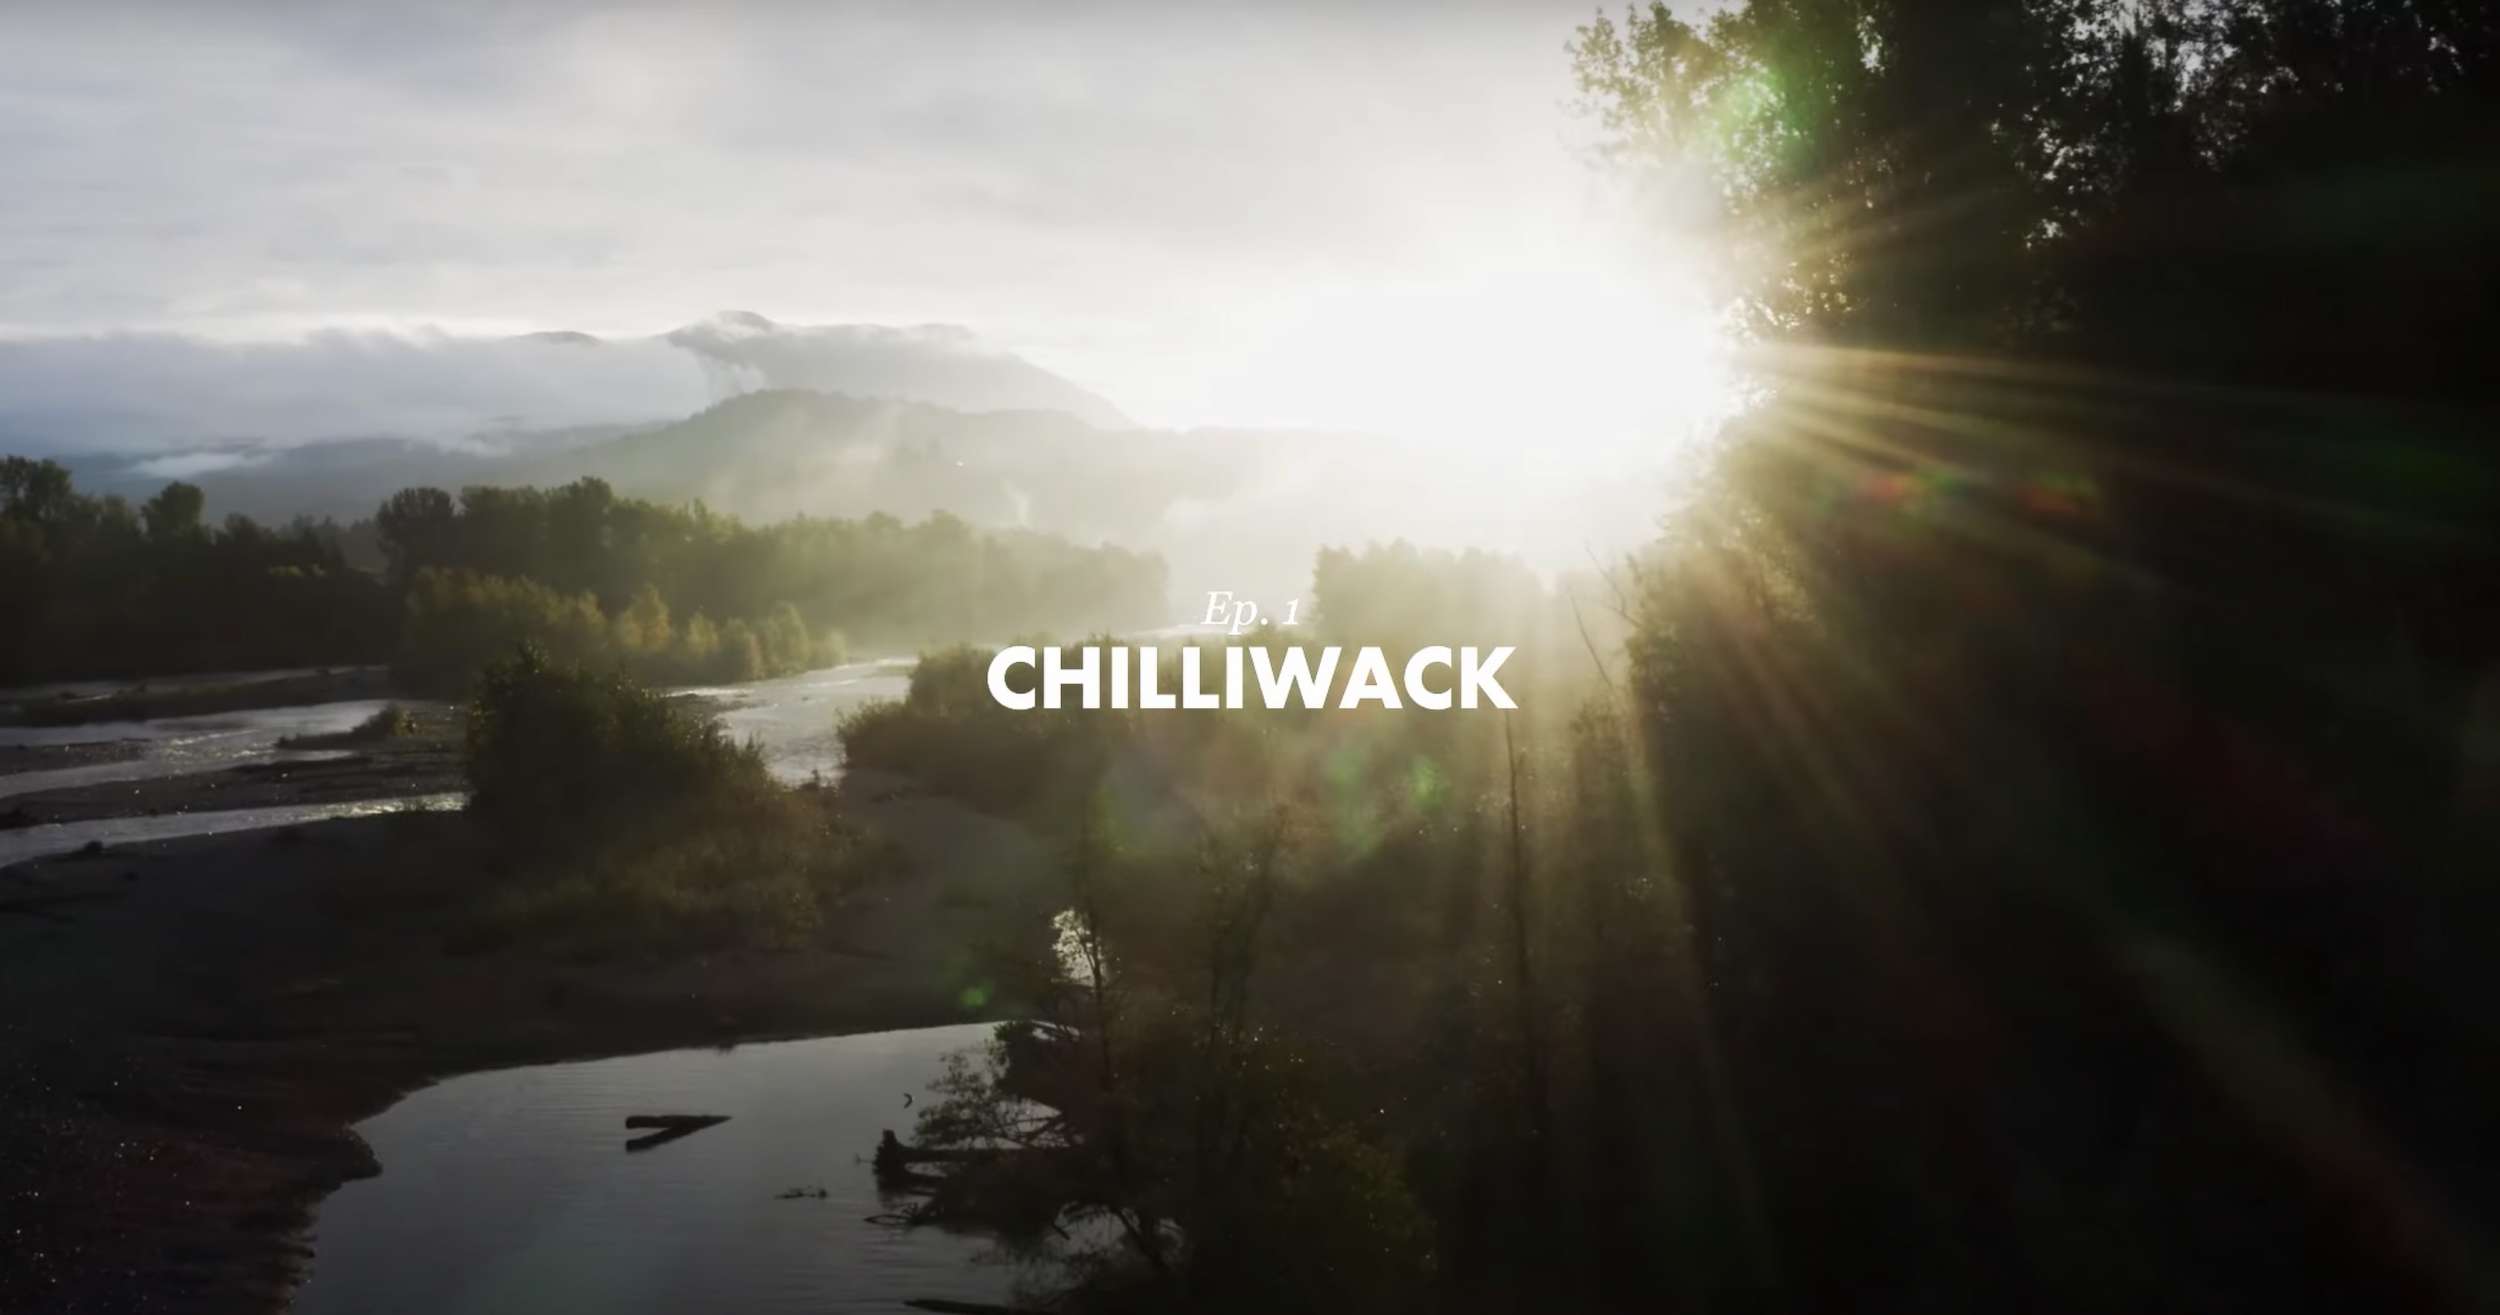 VIDEO: The SHOWCASE – Episode 1, Chilliwack